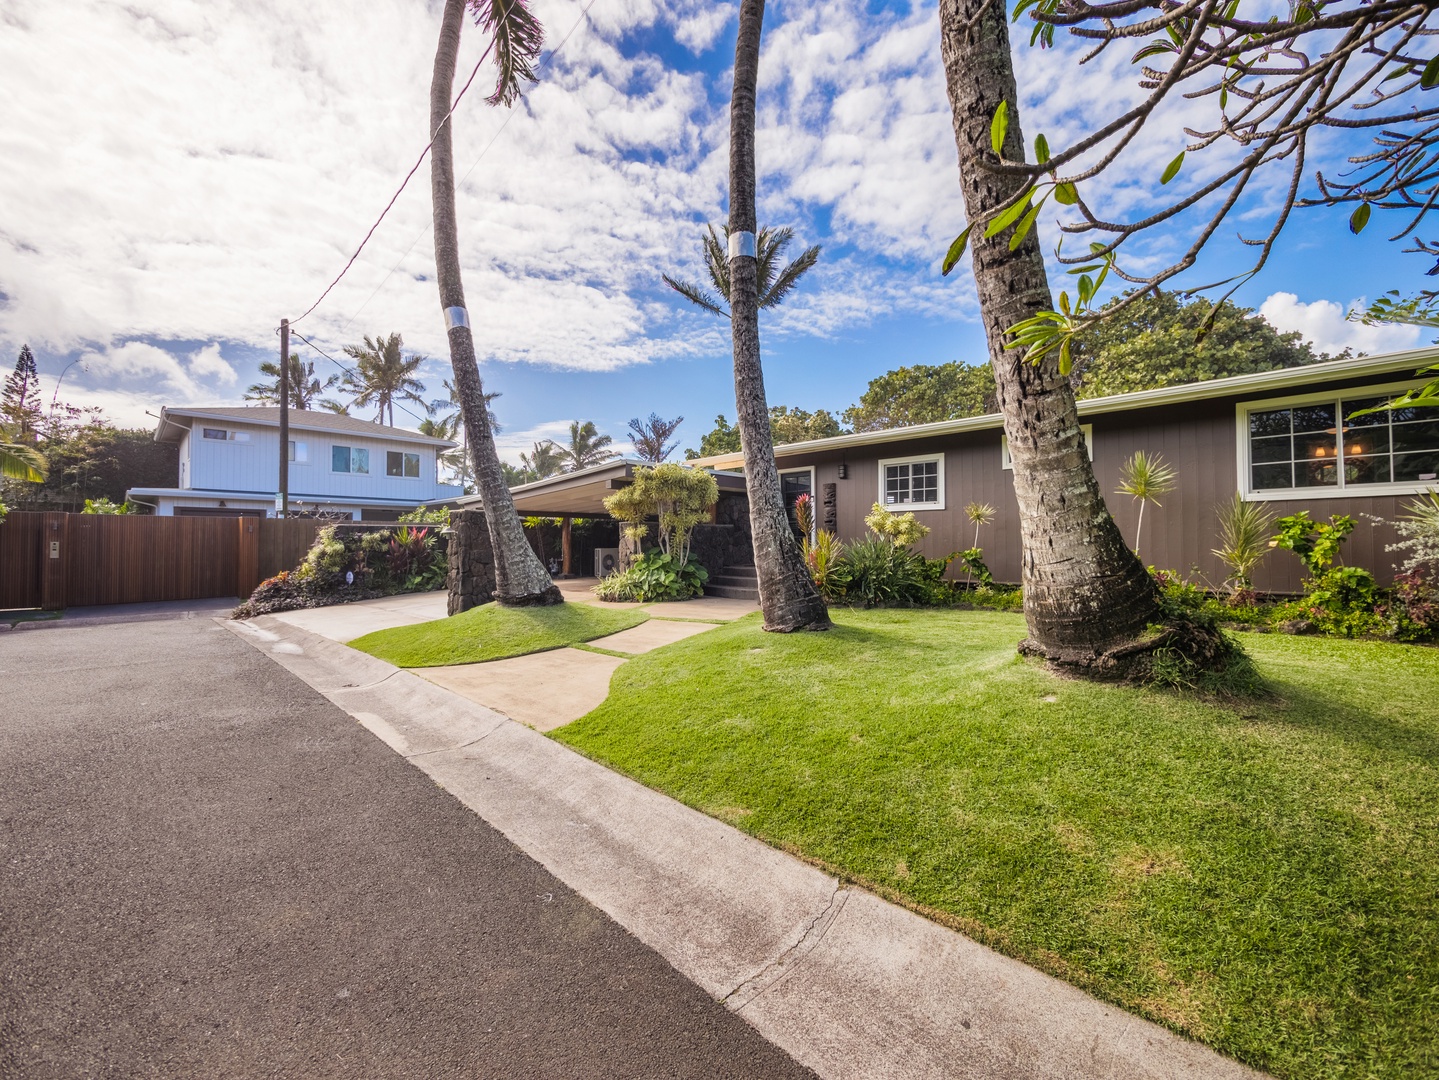 Haleiwa Vacation Rentals, Sunset Point Hawaiian Beachfront** - The driveway.